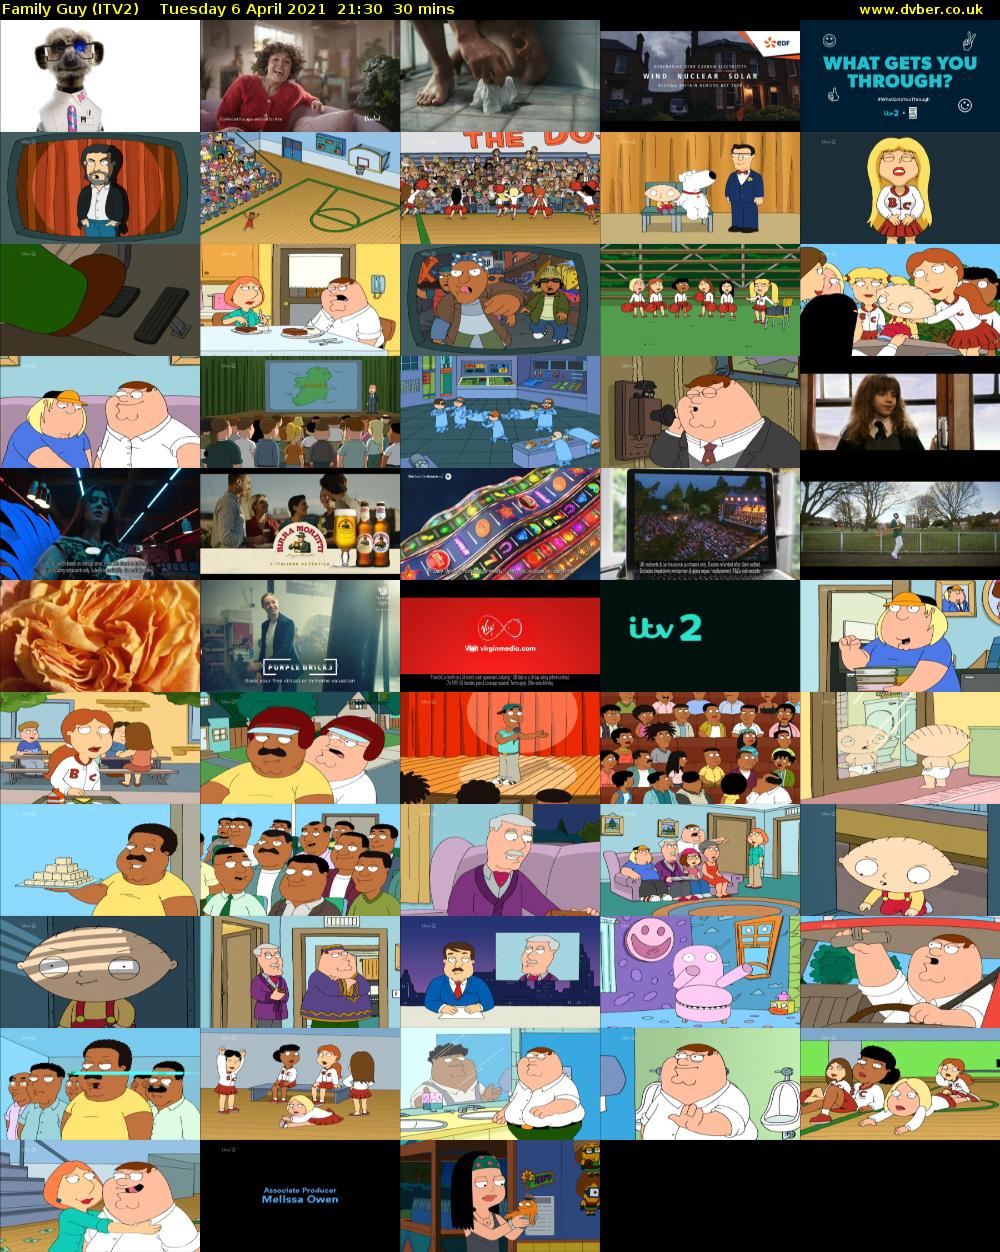 Family Guy (ITV2) Tuesday 6 April 2021 21:30 - 22:00